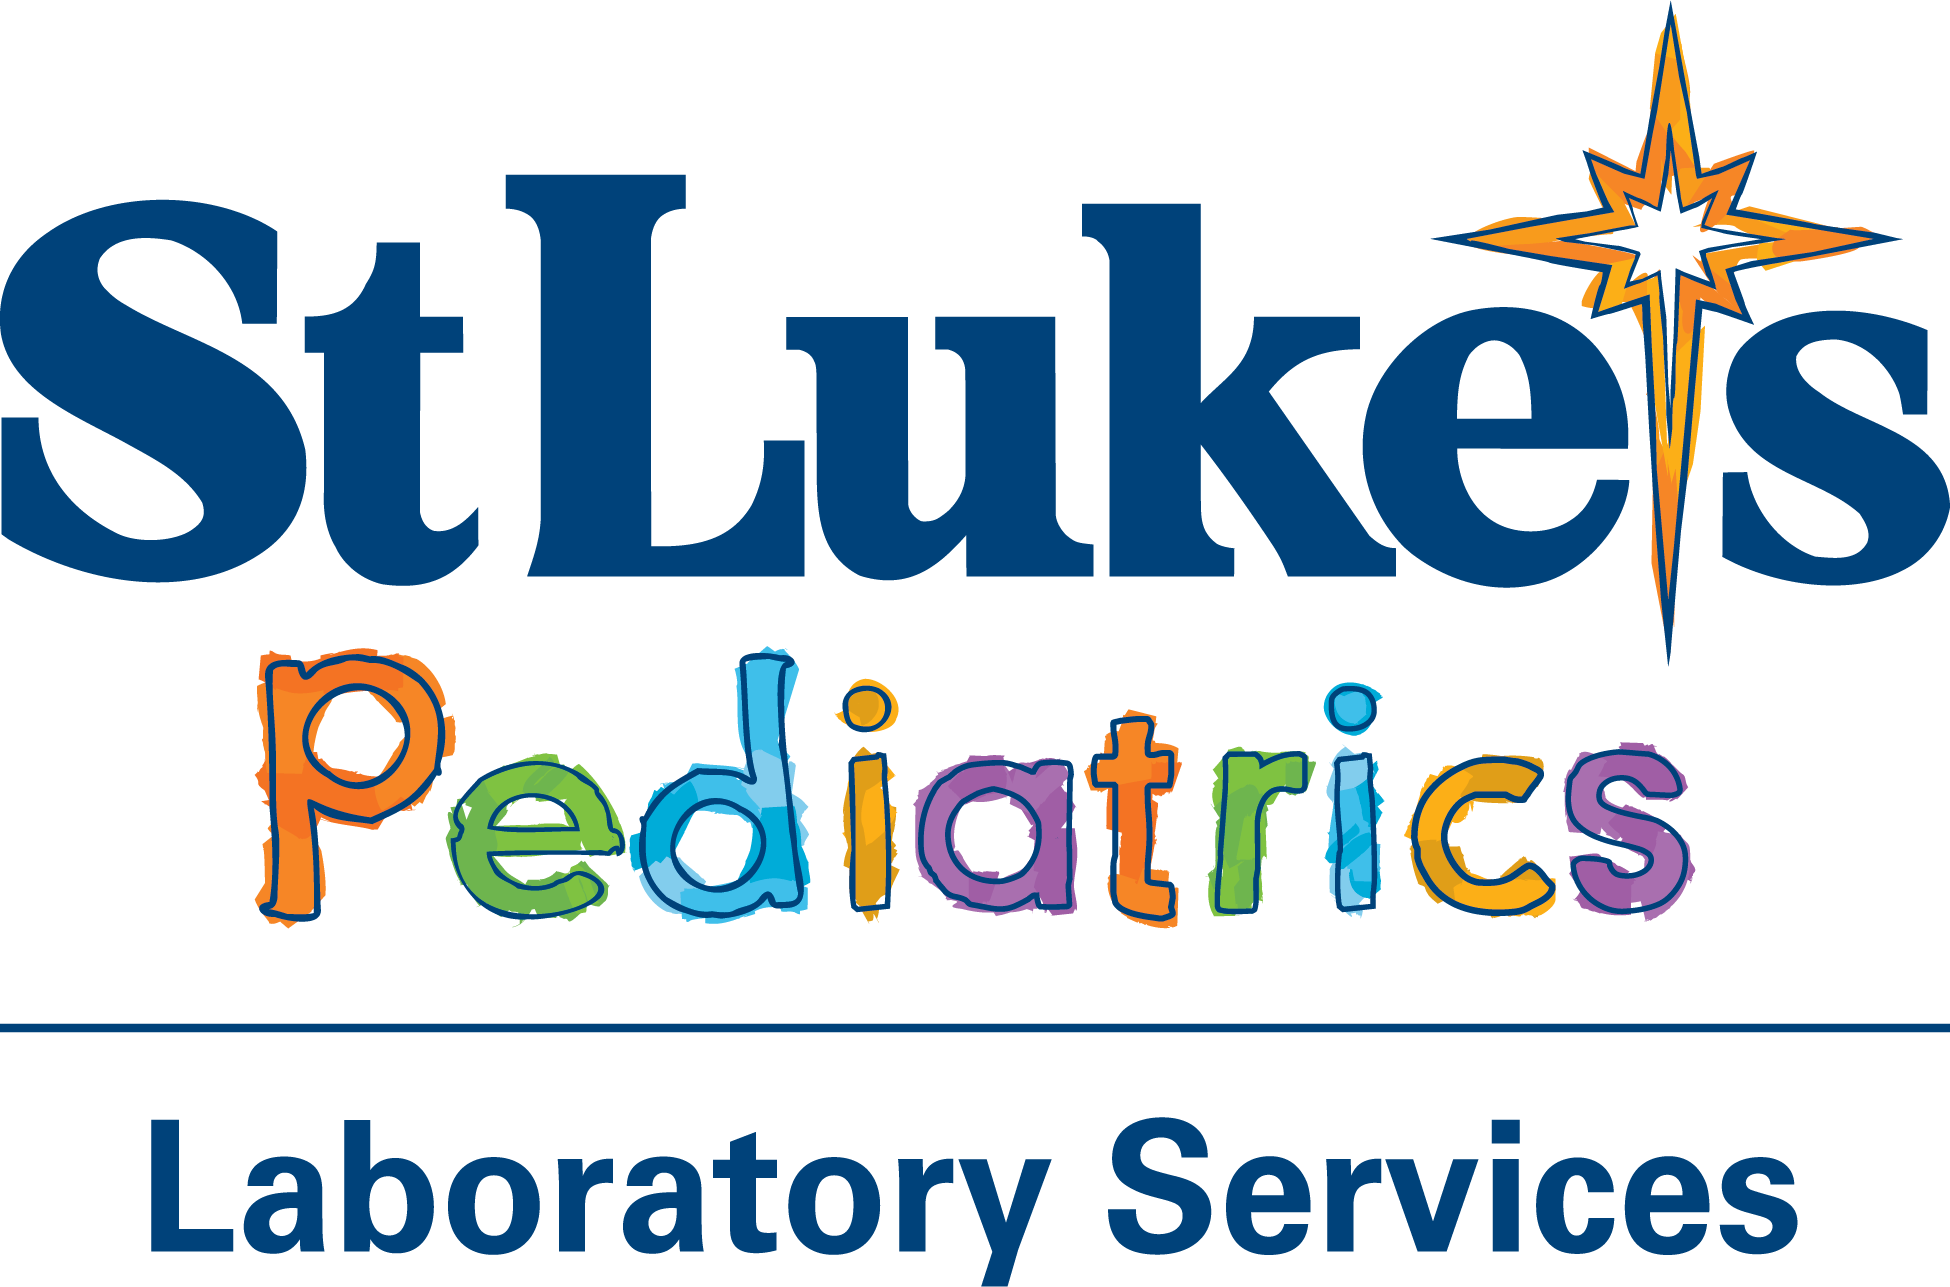 St. Luke's Pediatrics Laboratory Services 